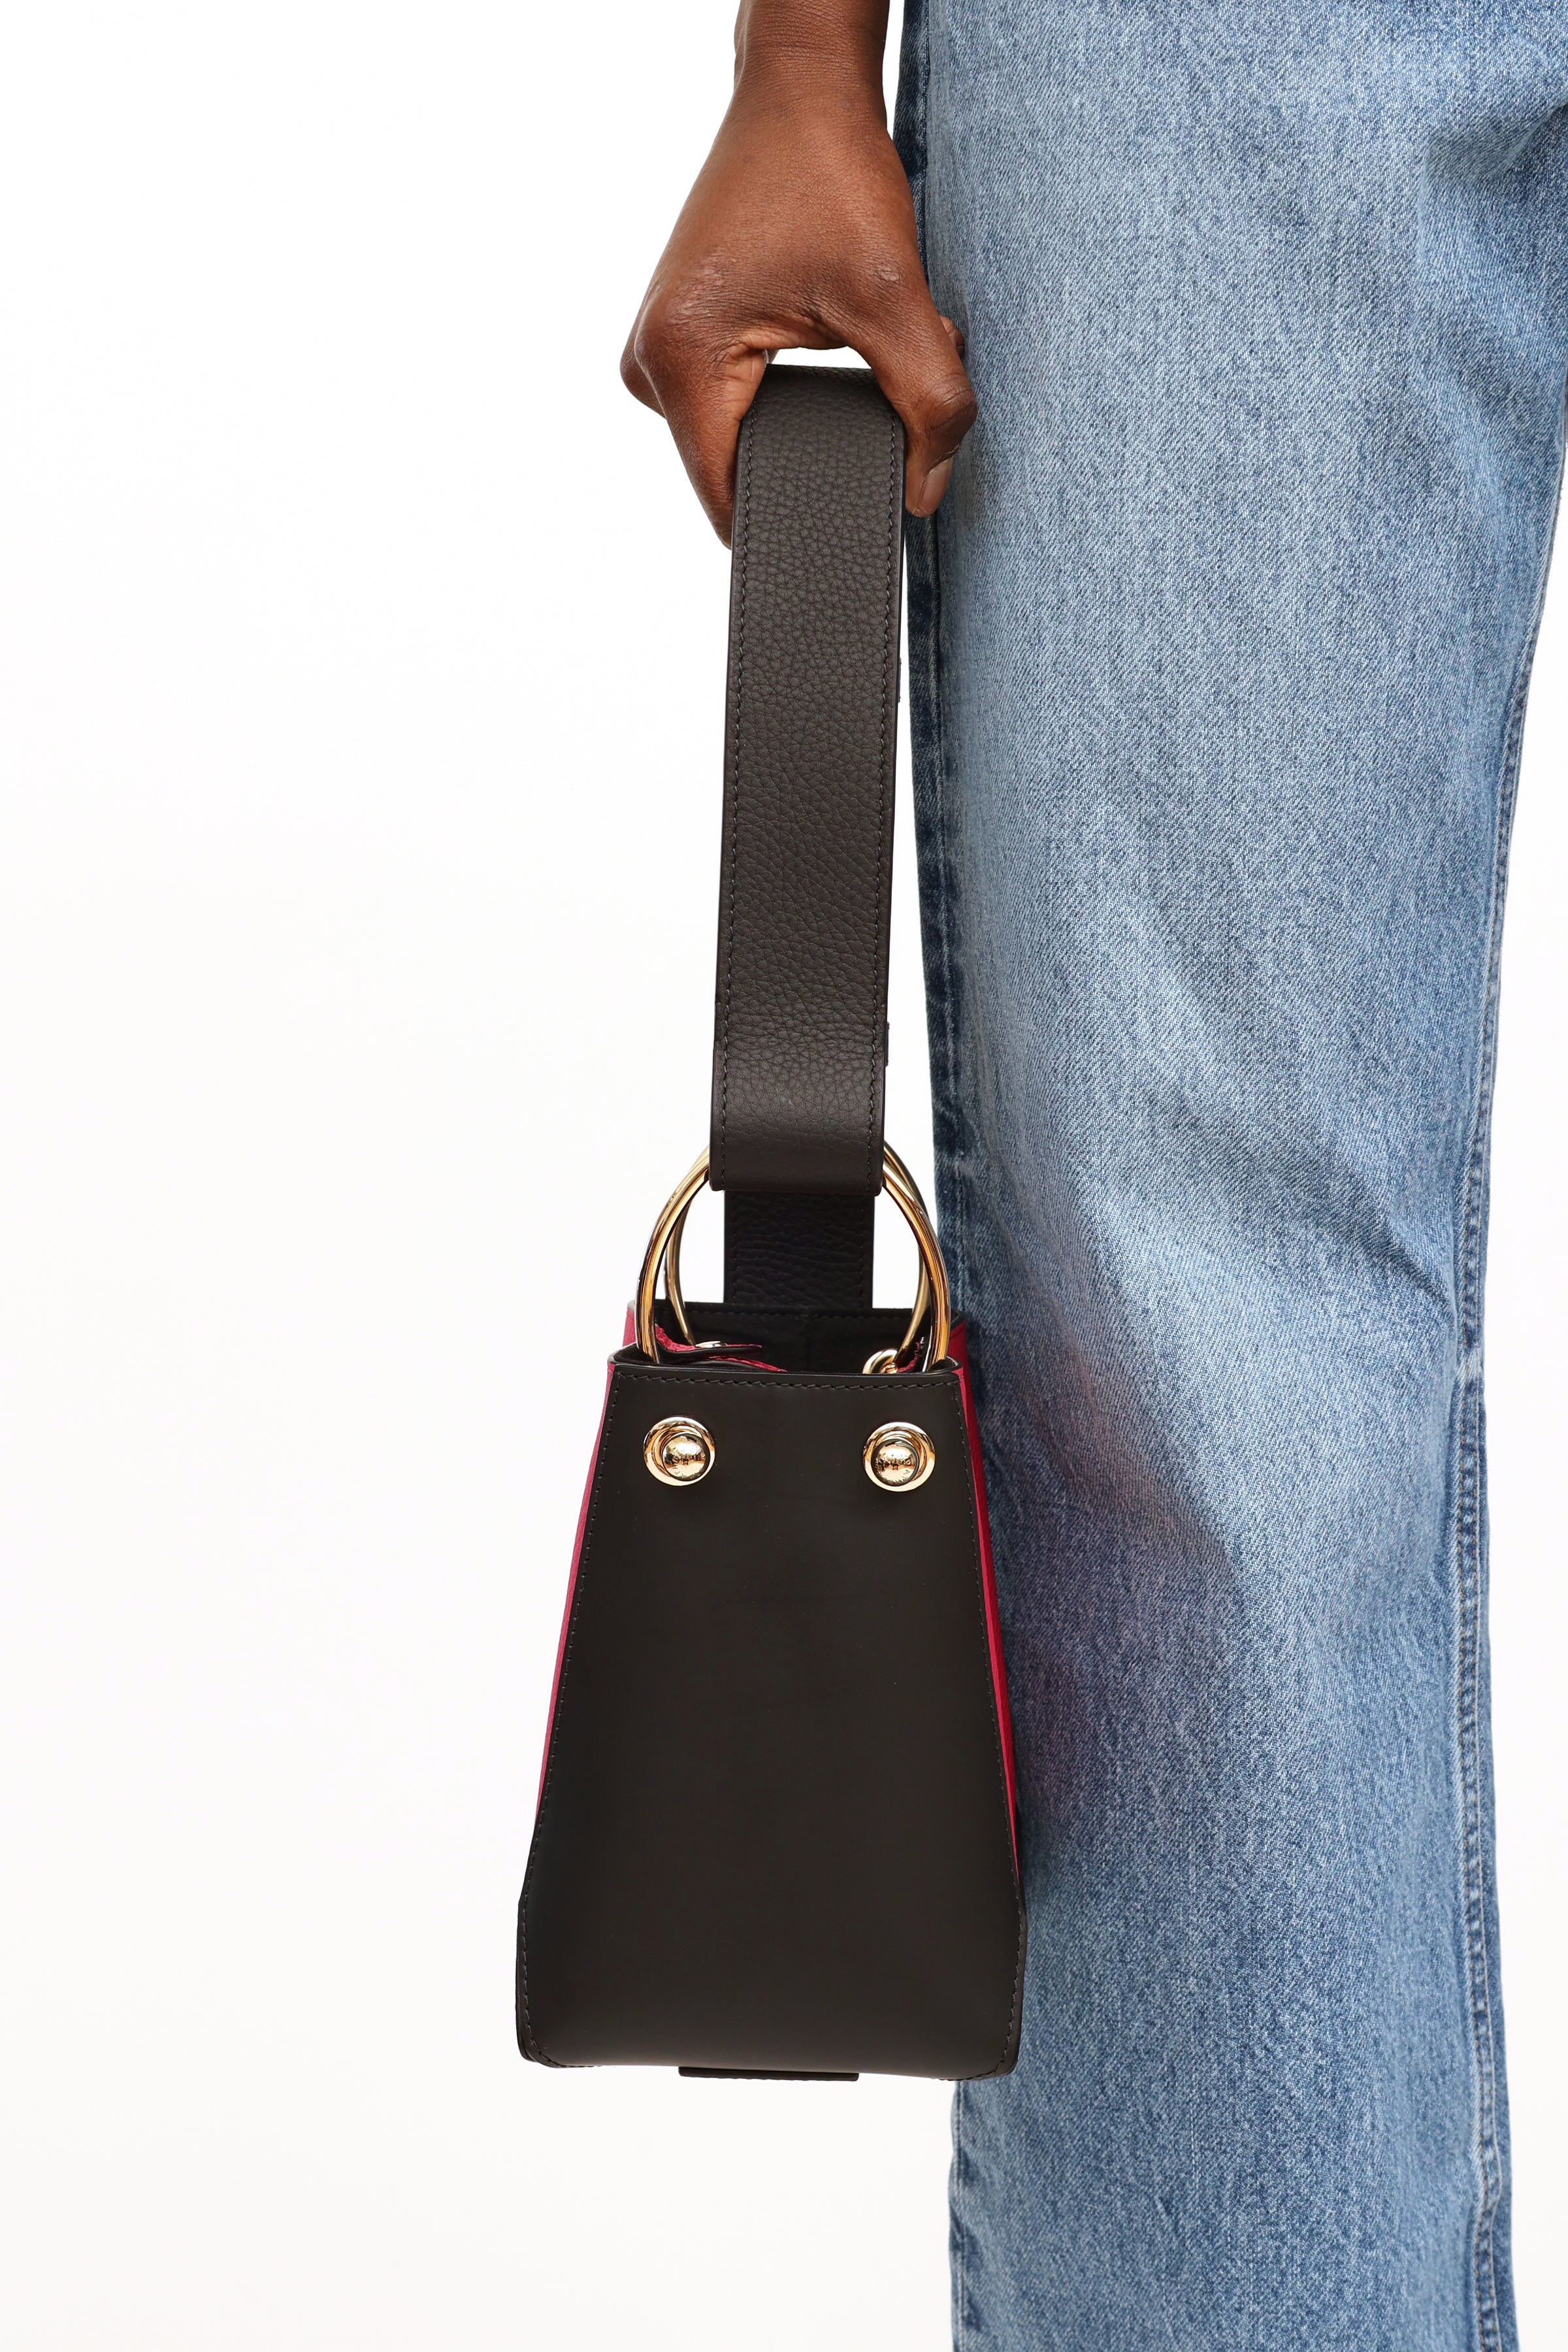 Strathberry Lana Nano Bucket Bag - Tri Colour Black Shearling/vanilla/maple